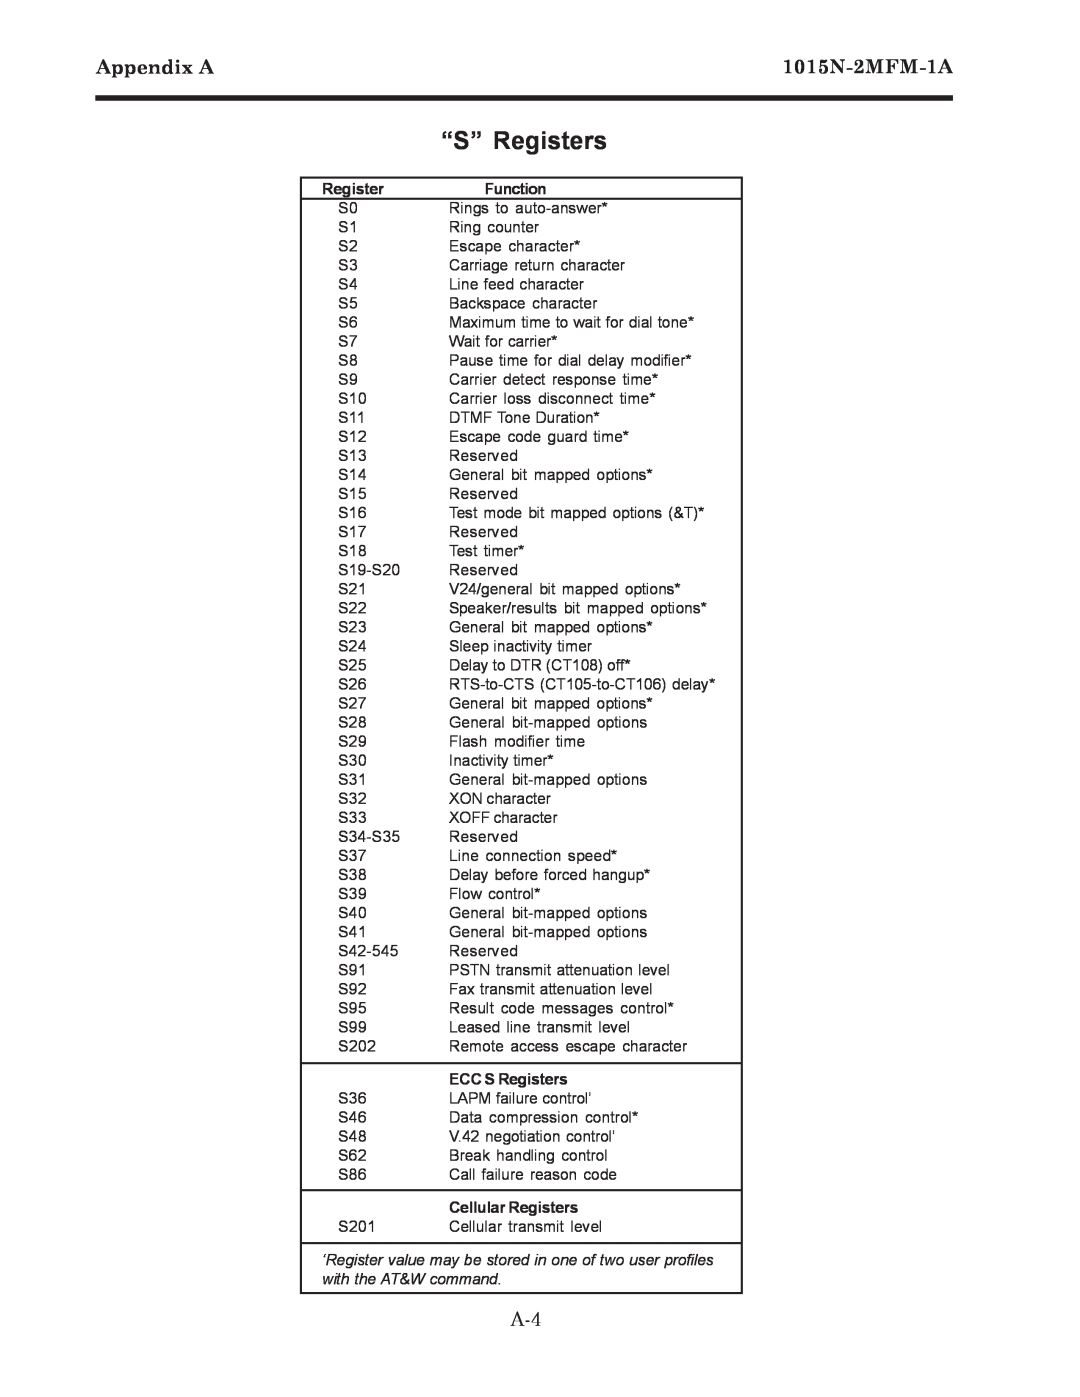 Siemens manual “S” Registers, Appendix A1015N-2MFM-1A 